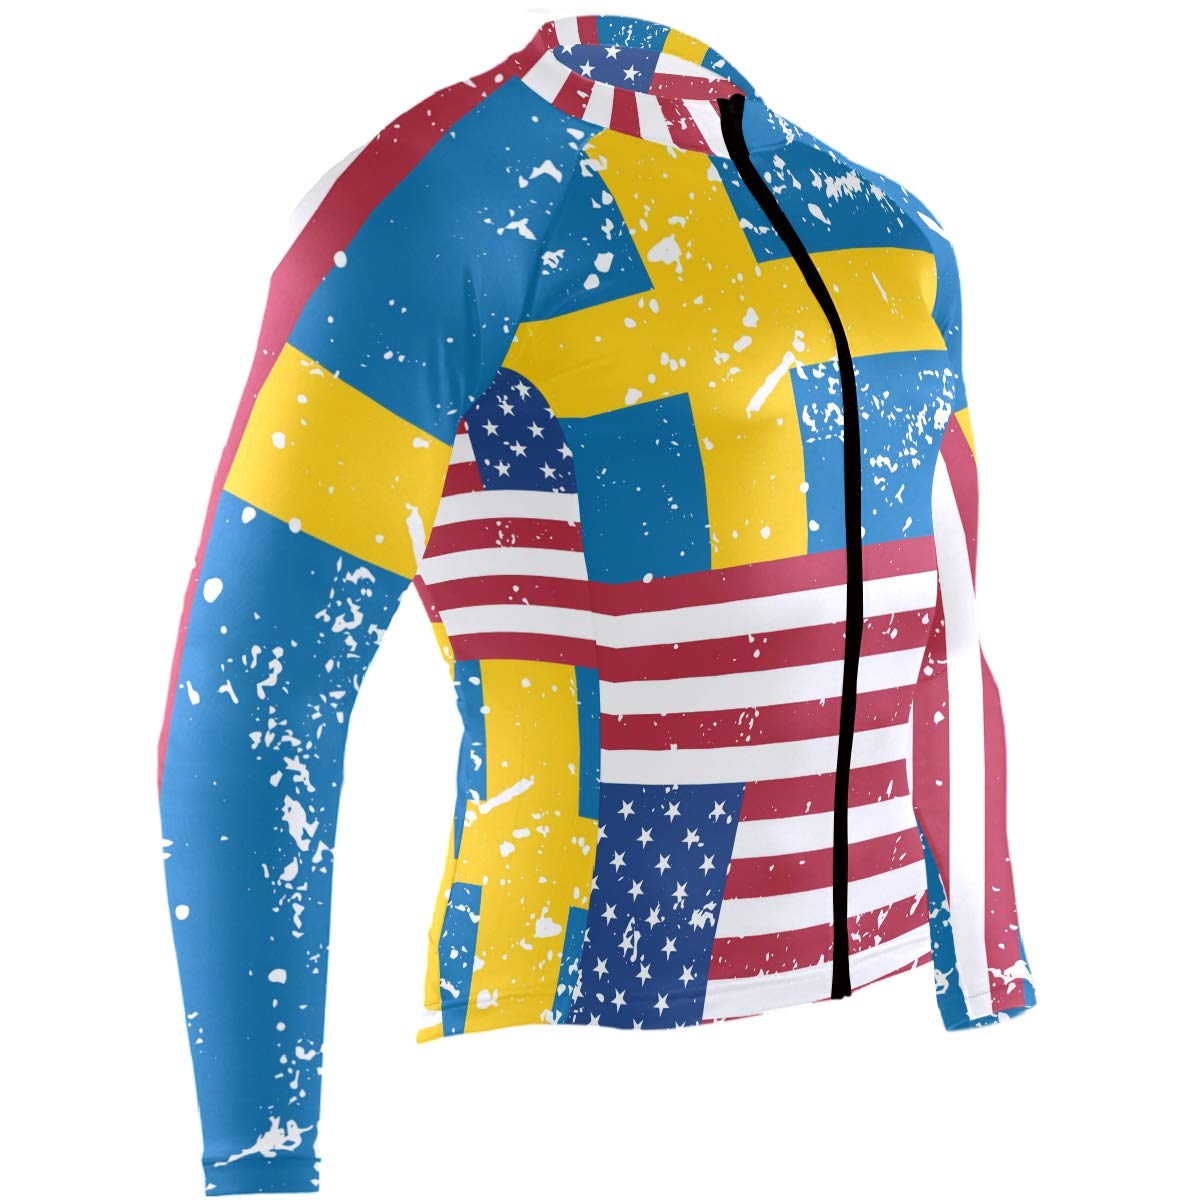 Cycling Jersey Men Long Sleeve Tops American Swedish Flag Bike Shirts Bicycle Clothes Jacket